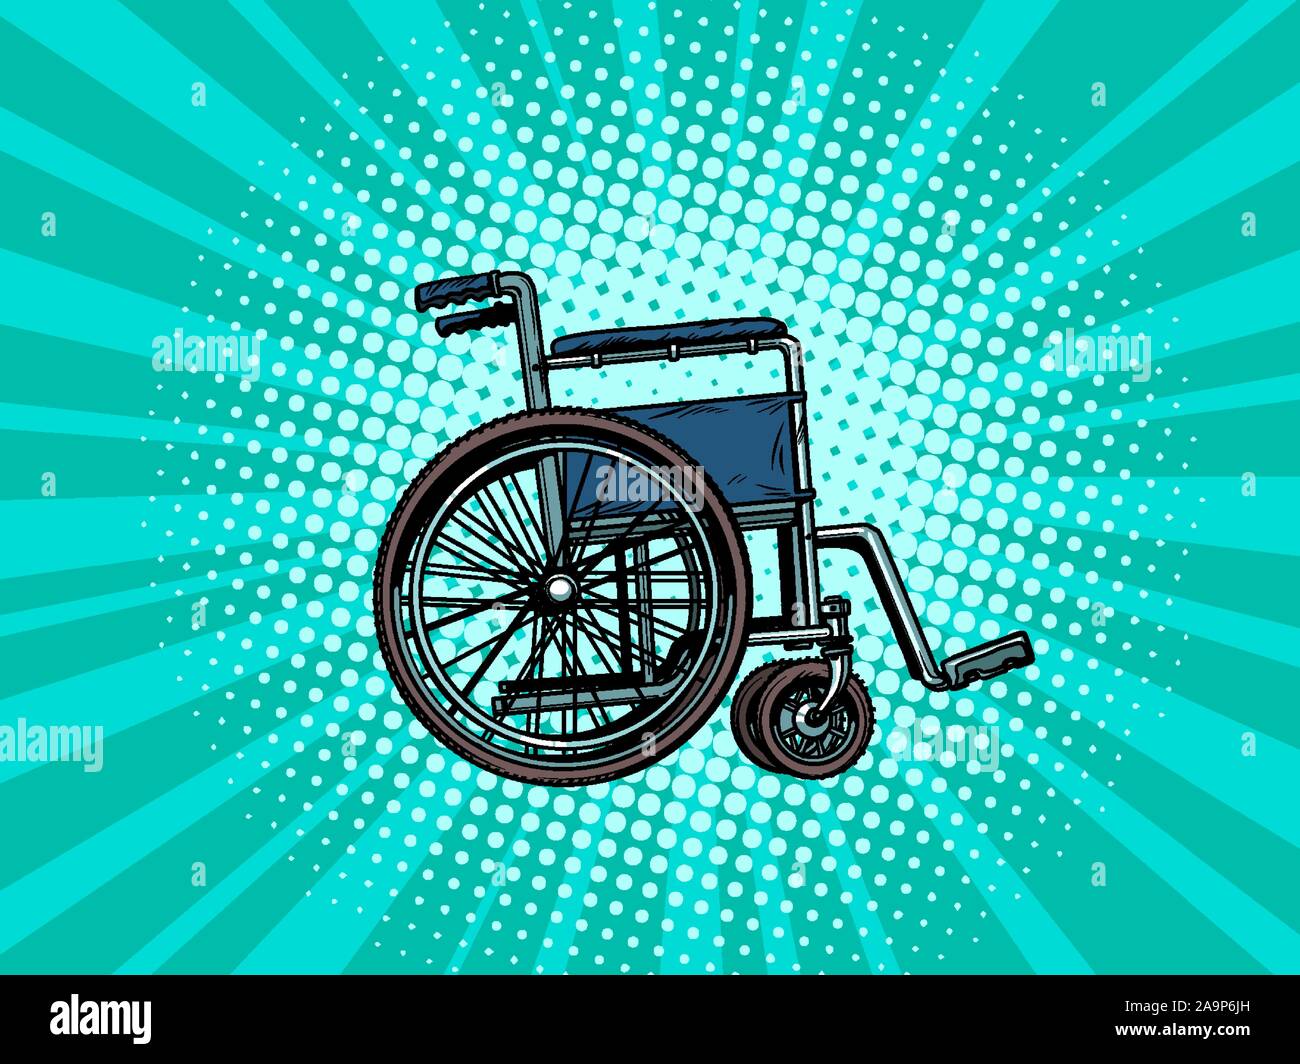 empty wheelchair. human health, rehabilitation and inclusion Stock Vector